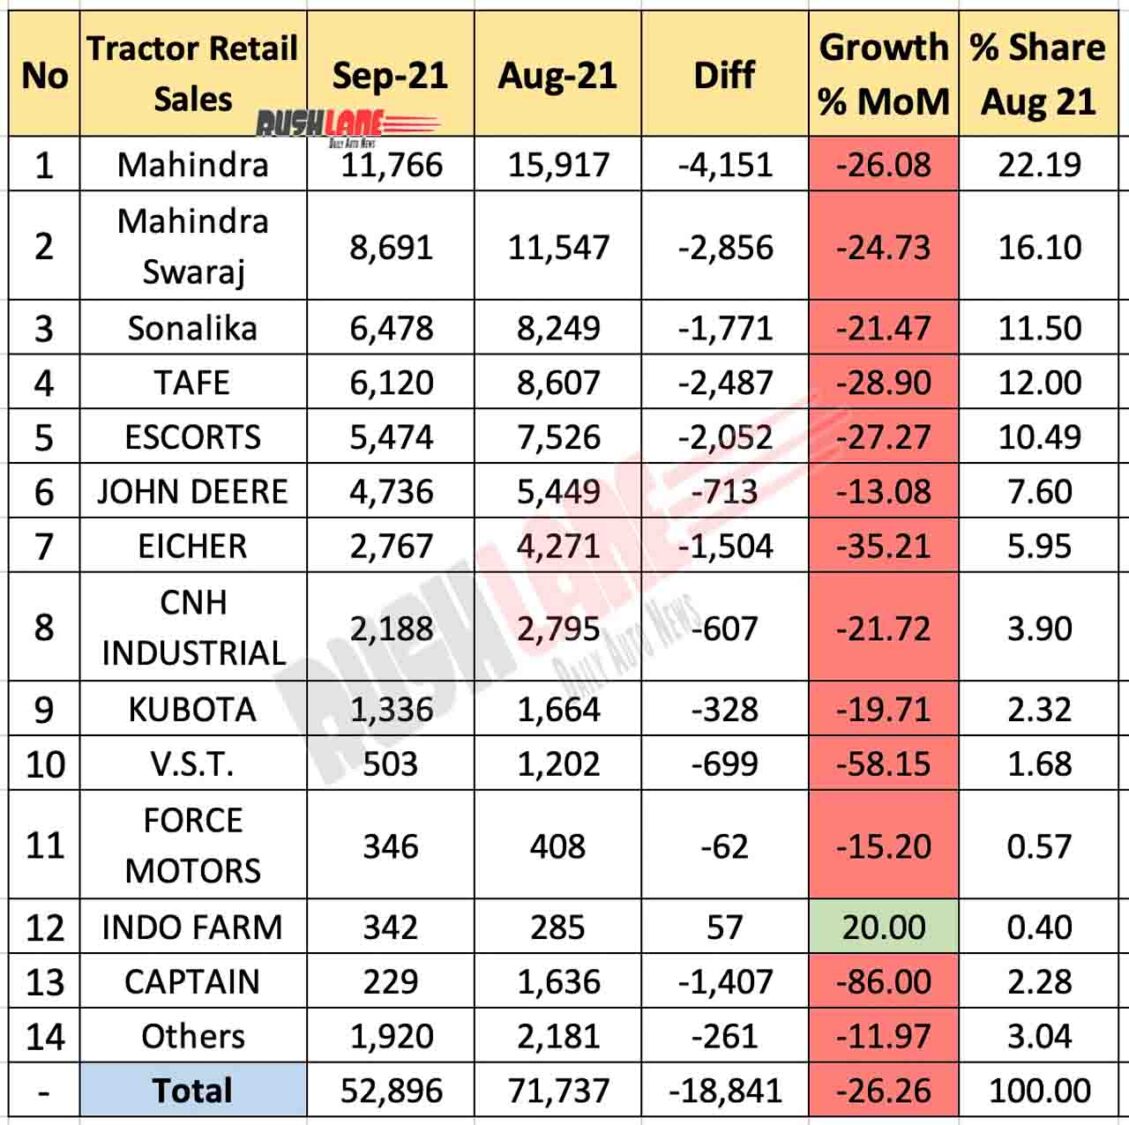 Tractor Sales Sep 2021 vs Aug 2021 (MoM)